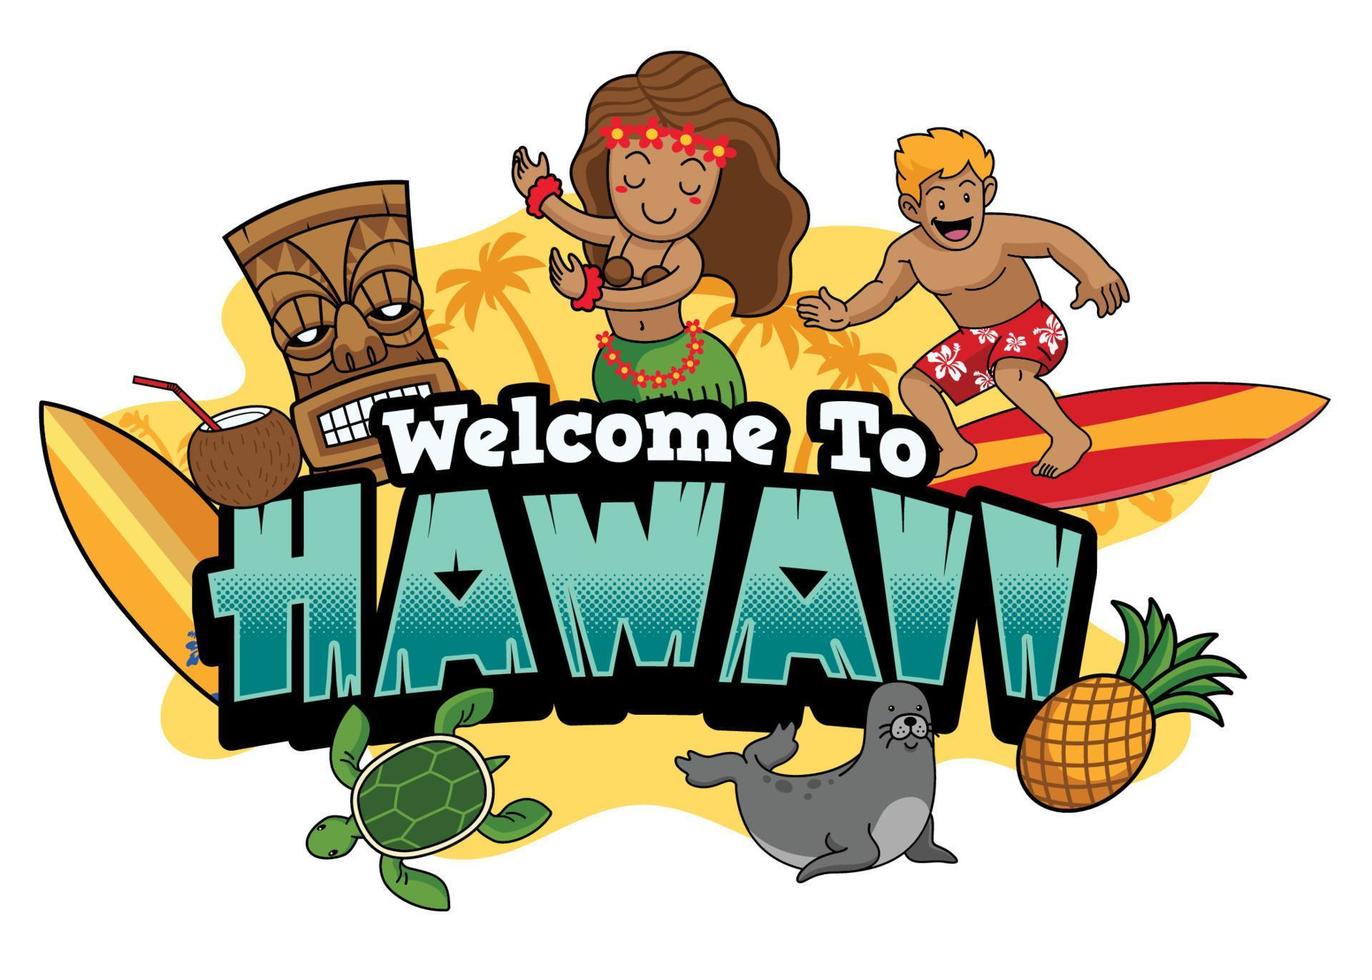 welcome to hawaii cartoon style vector